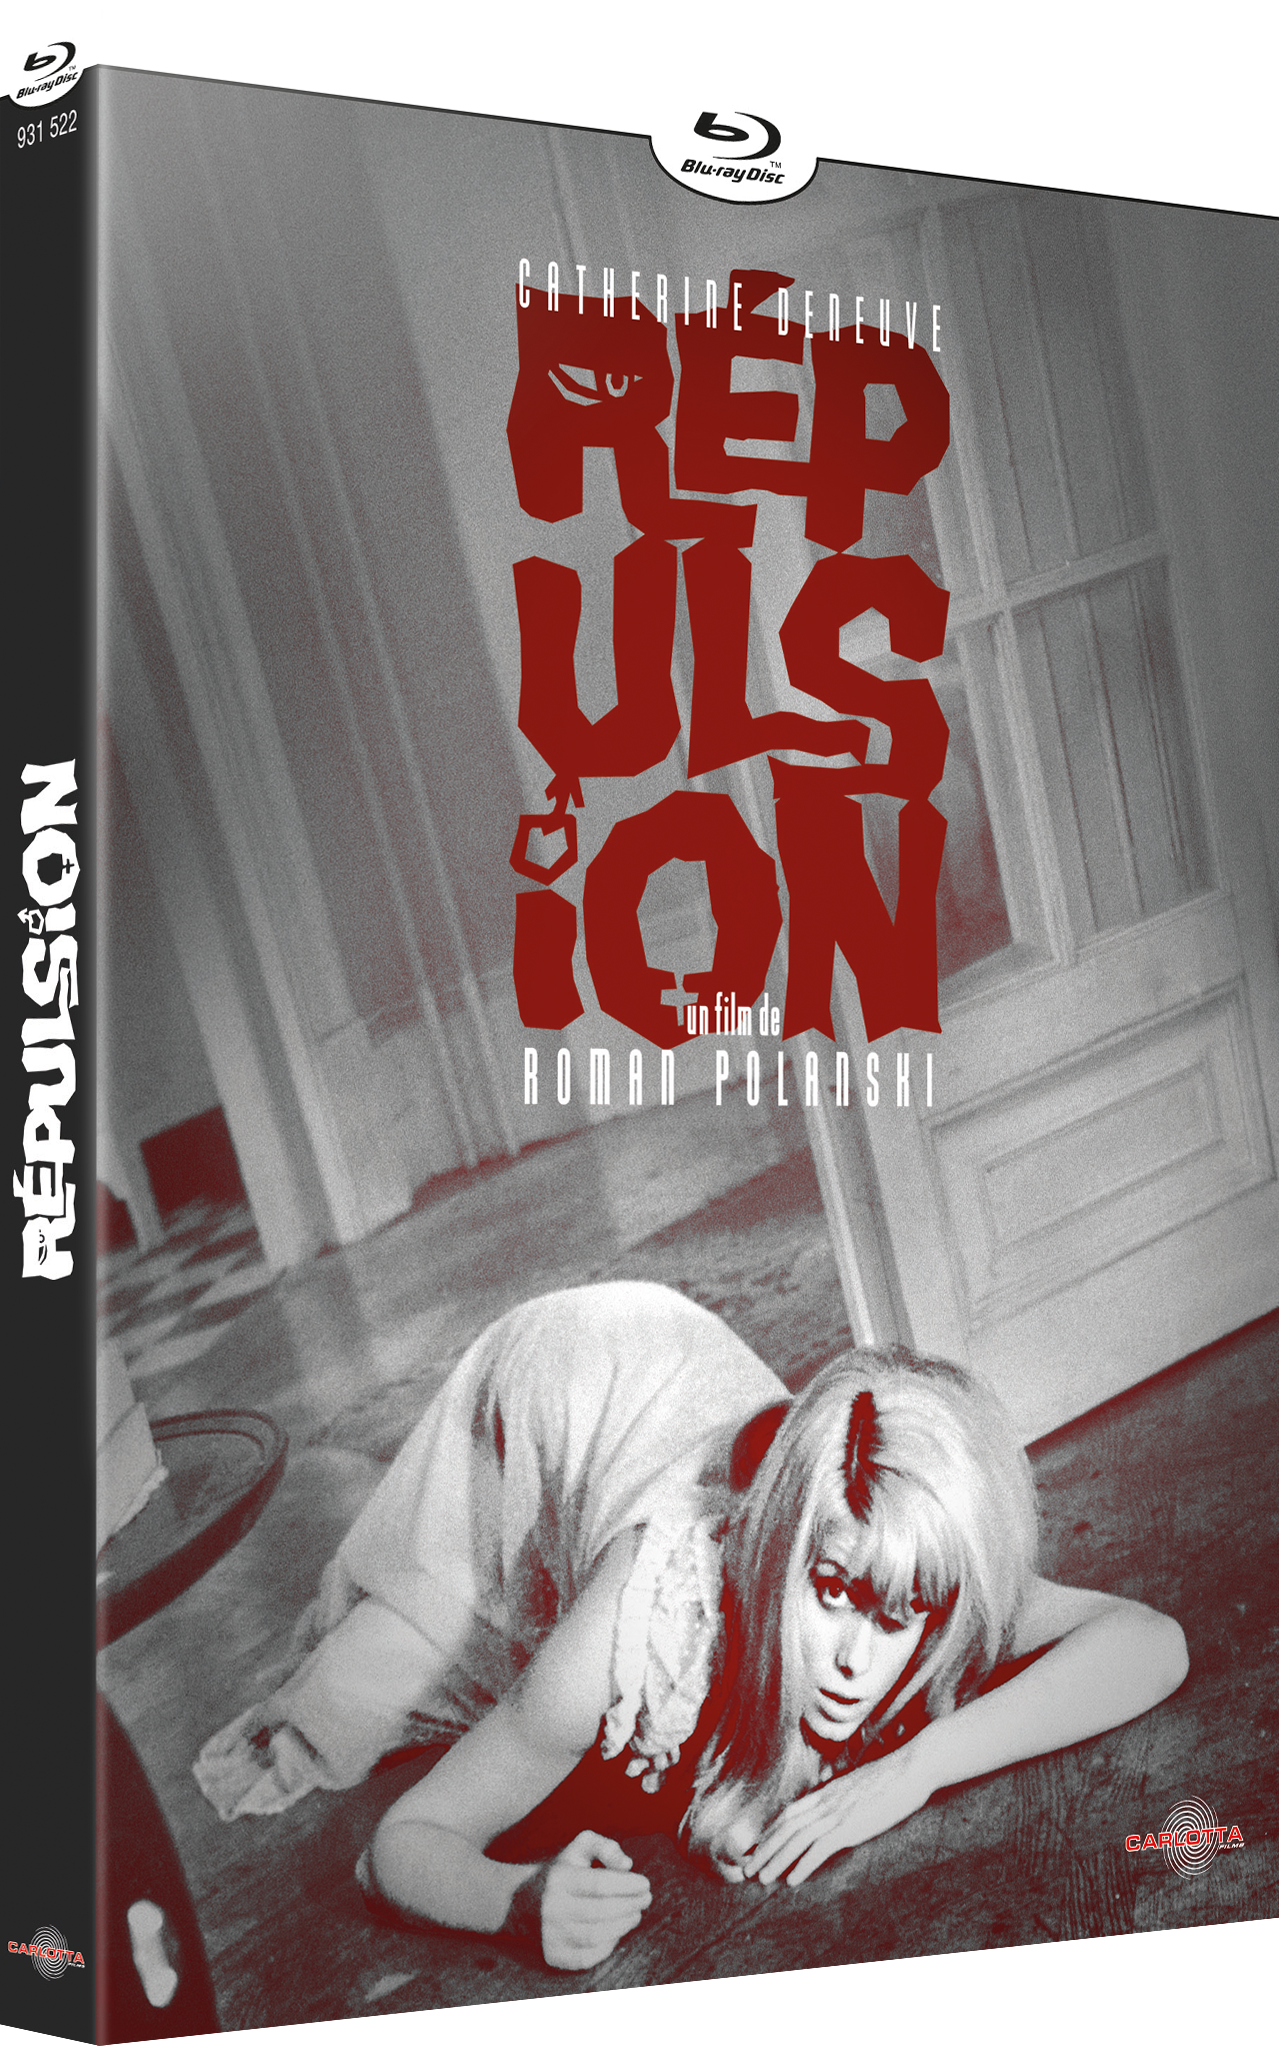 Repulsion by Roman Polanski